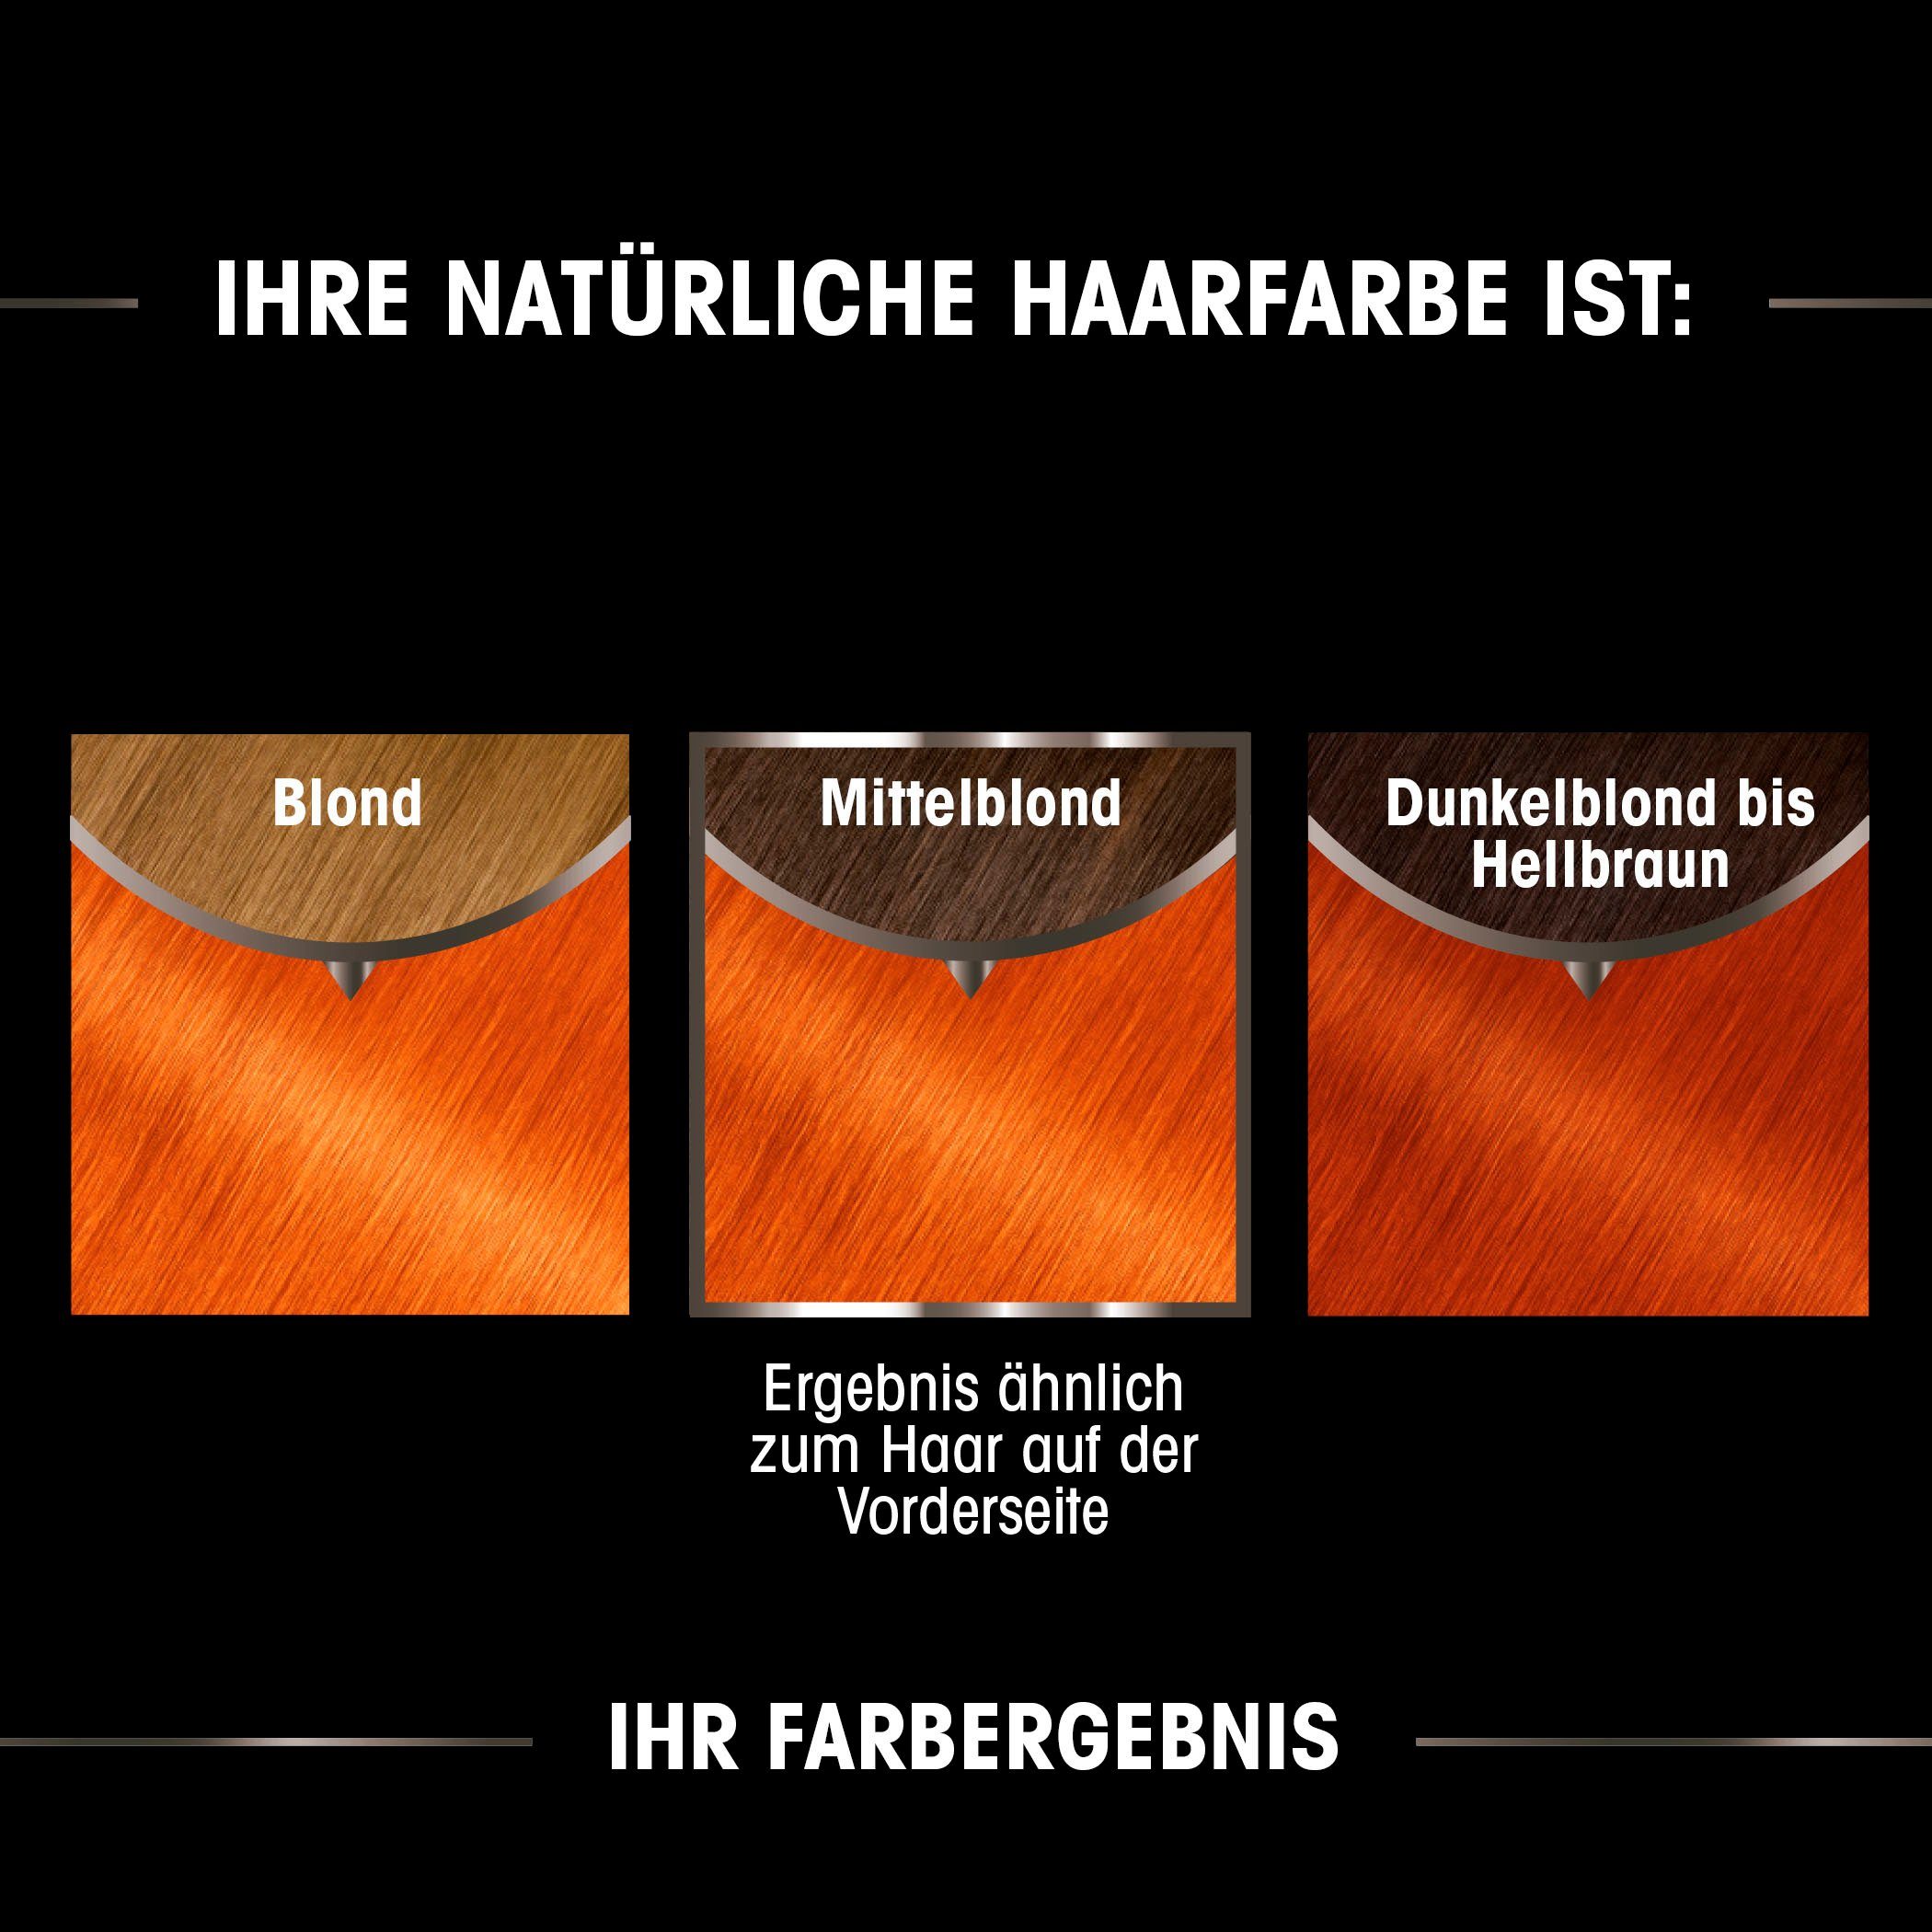 3-tlg. GARNIER Haarfarbe, Set, Olia Garnier dauerhafte Coloration